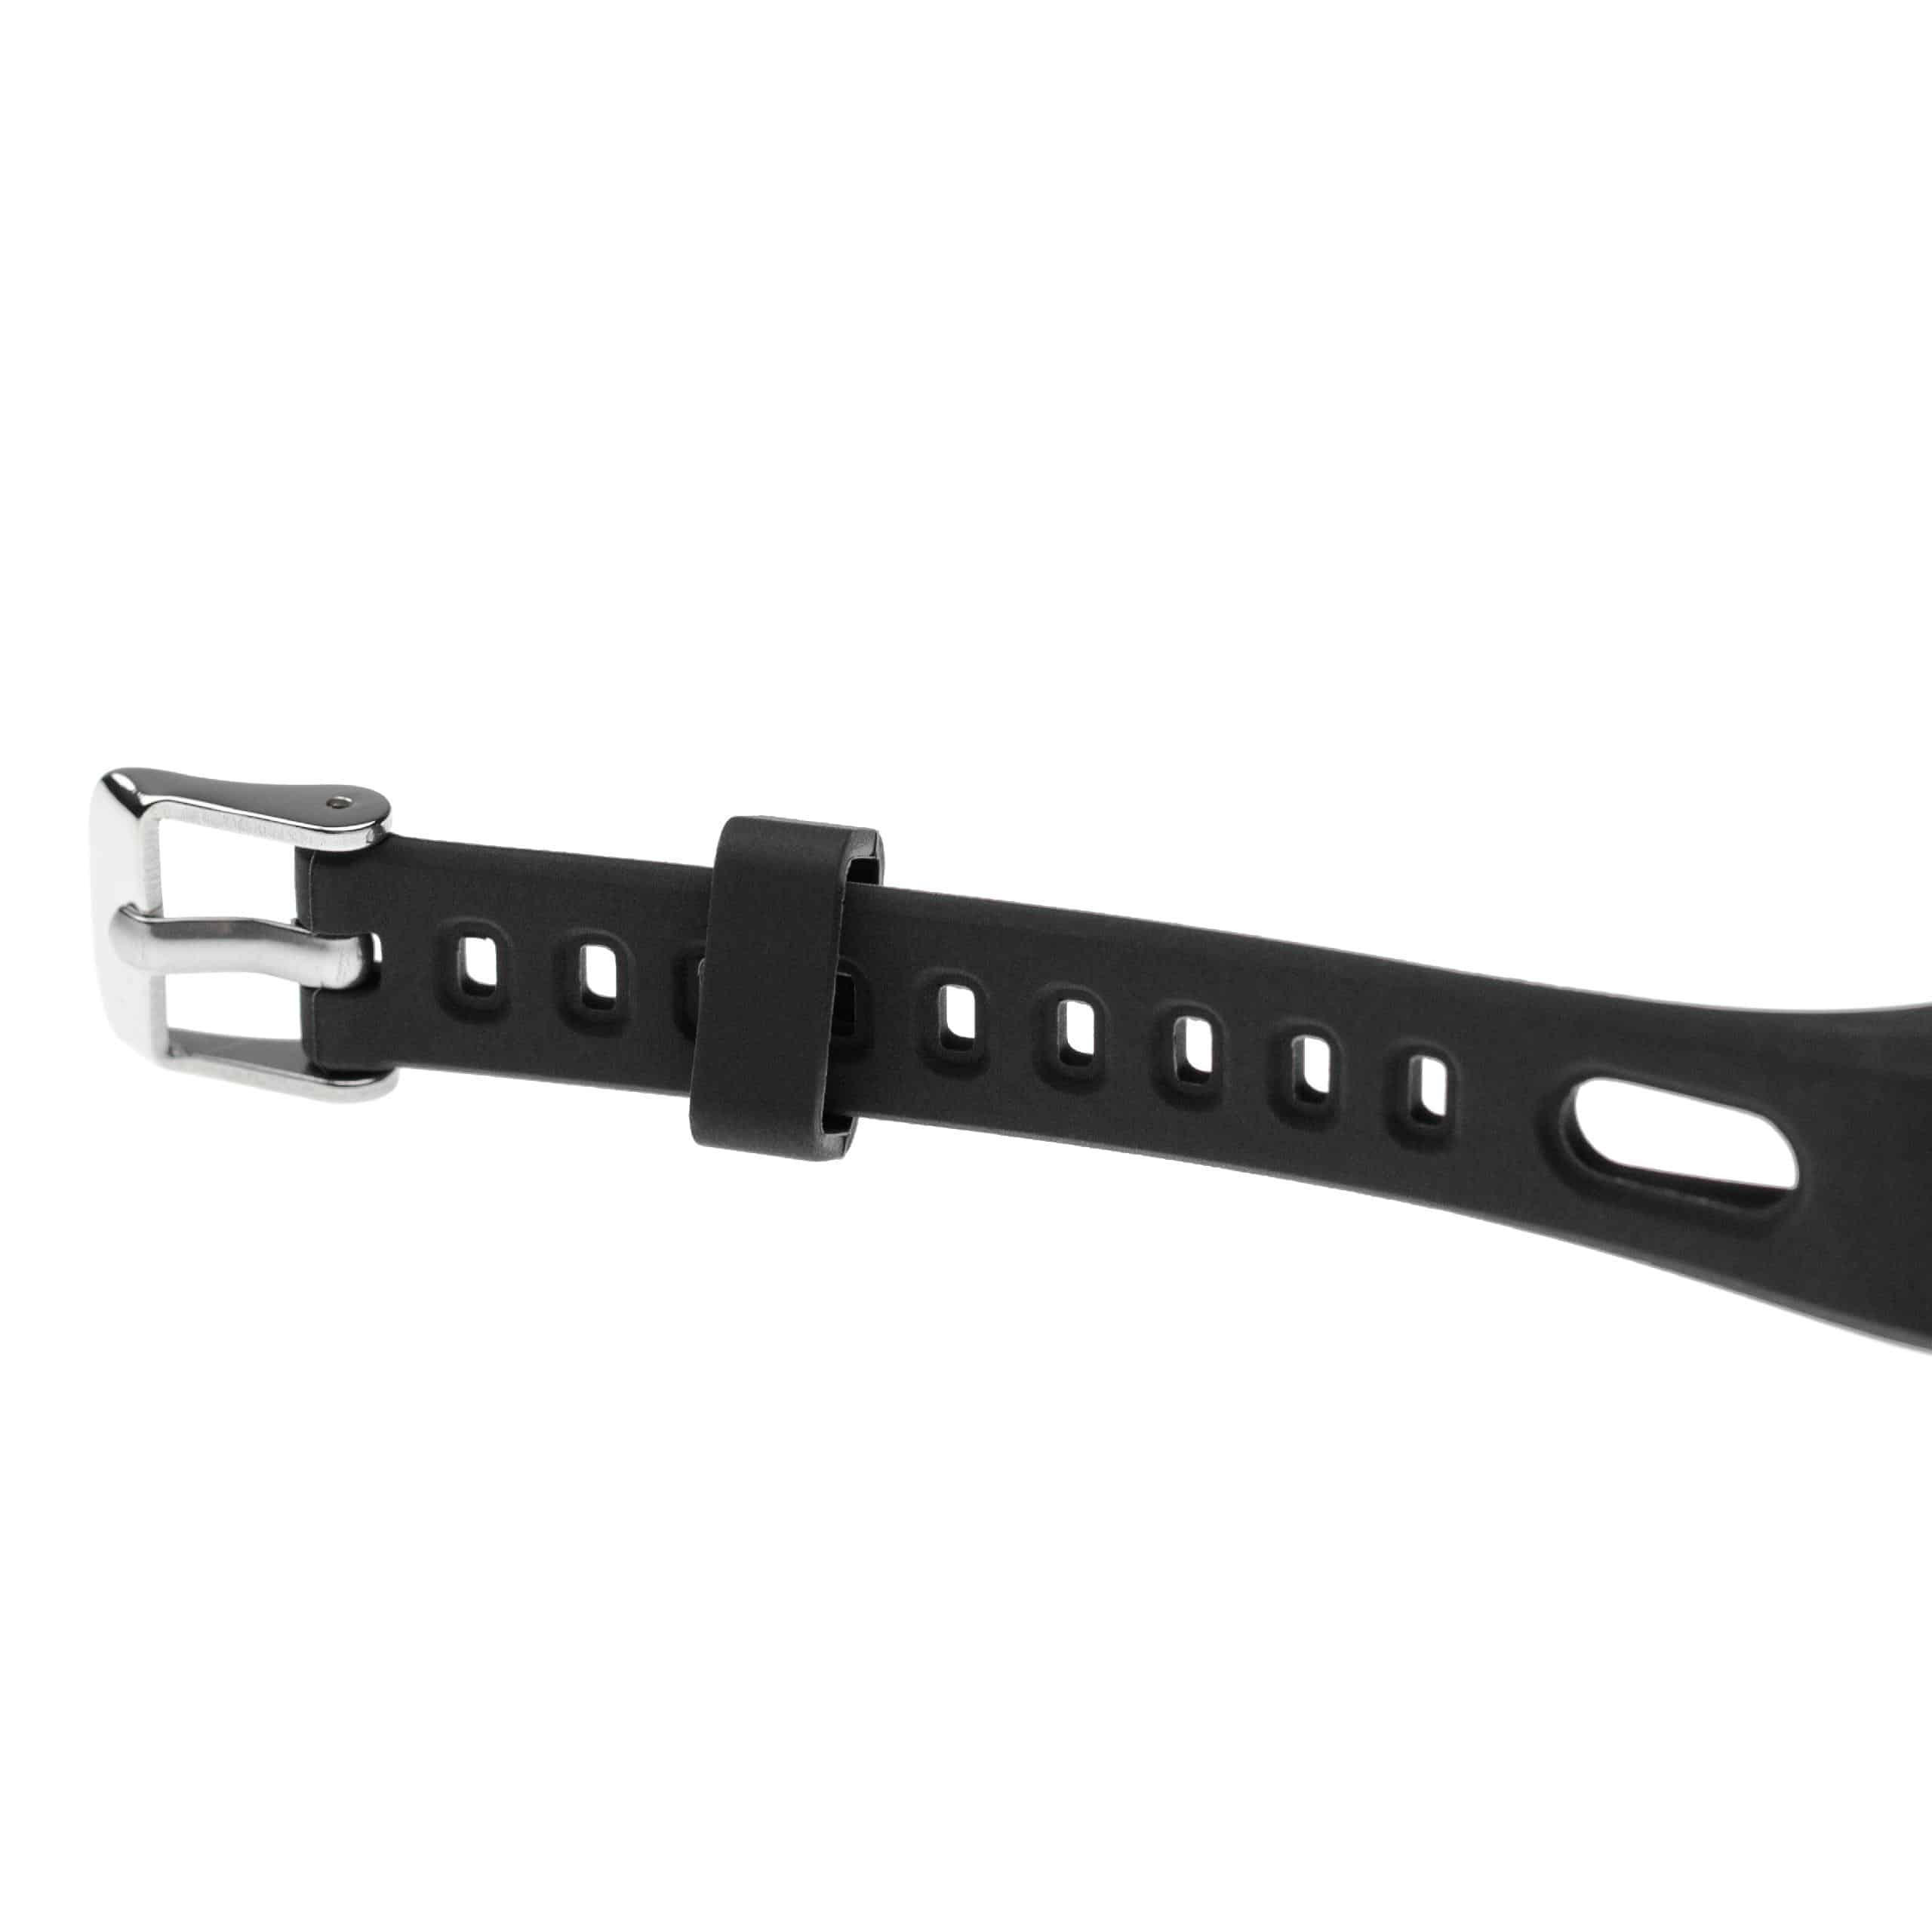 cinturino per Huawei Honor / Running Smartwatch - 20,1 cm lunghezza, 40mm ampiezza, silicone, nero